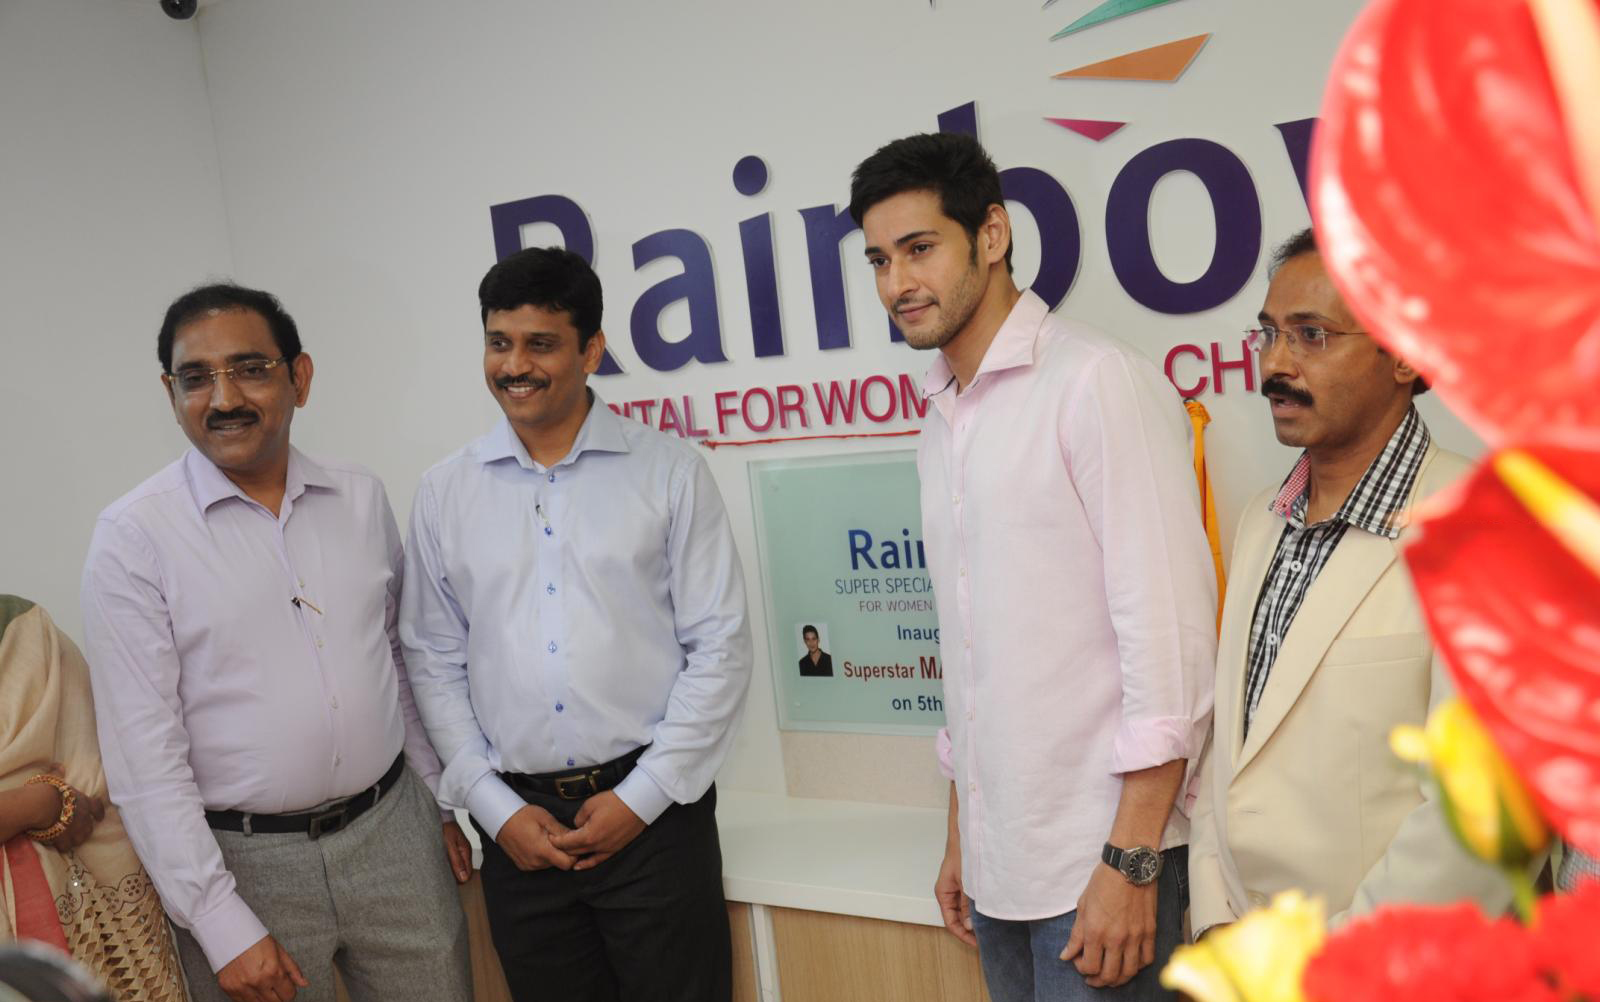 Mahesh Babu Launches Rainbow Hospital